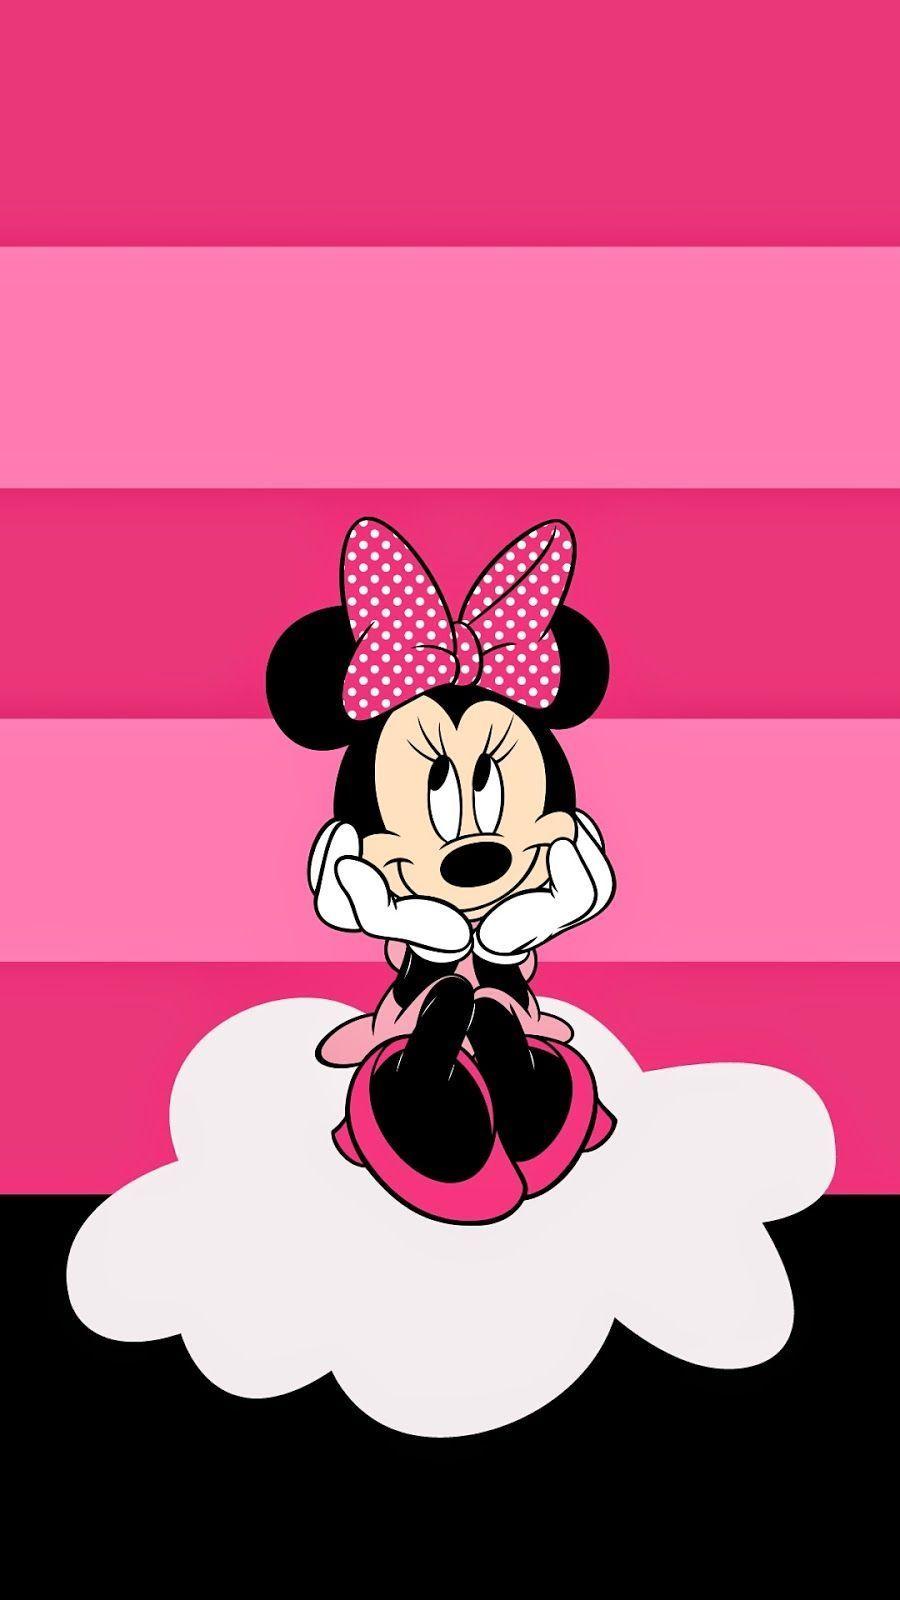 Siêu đẹp 999 Mickey Mouse background pink cho desktop và mobile